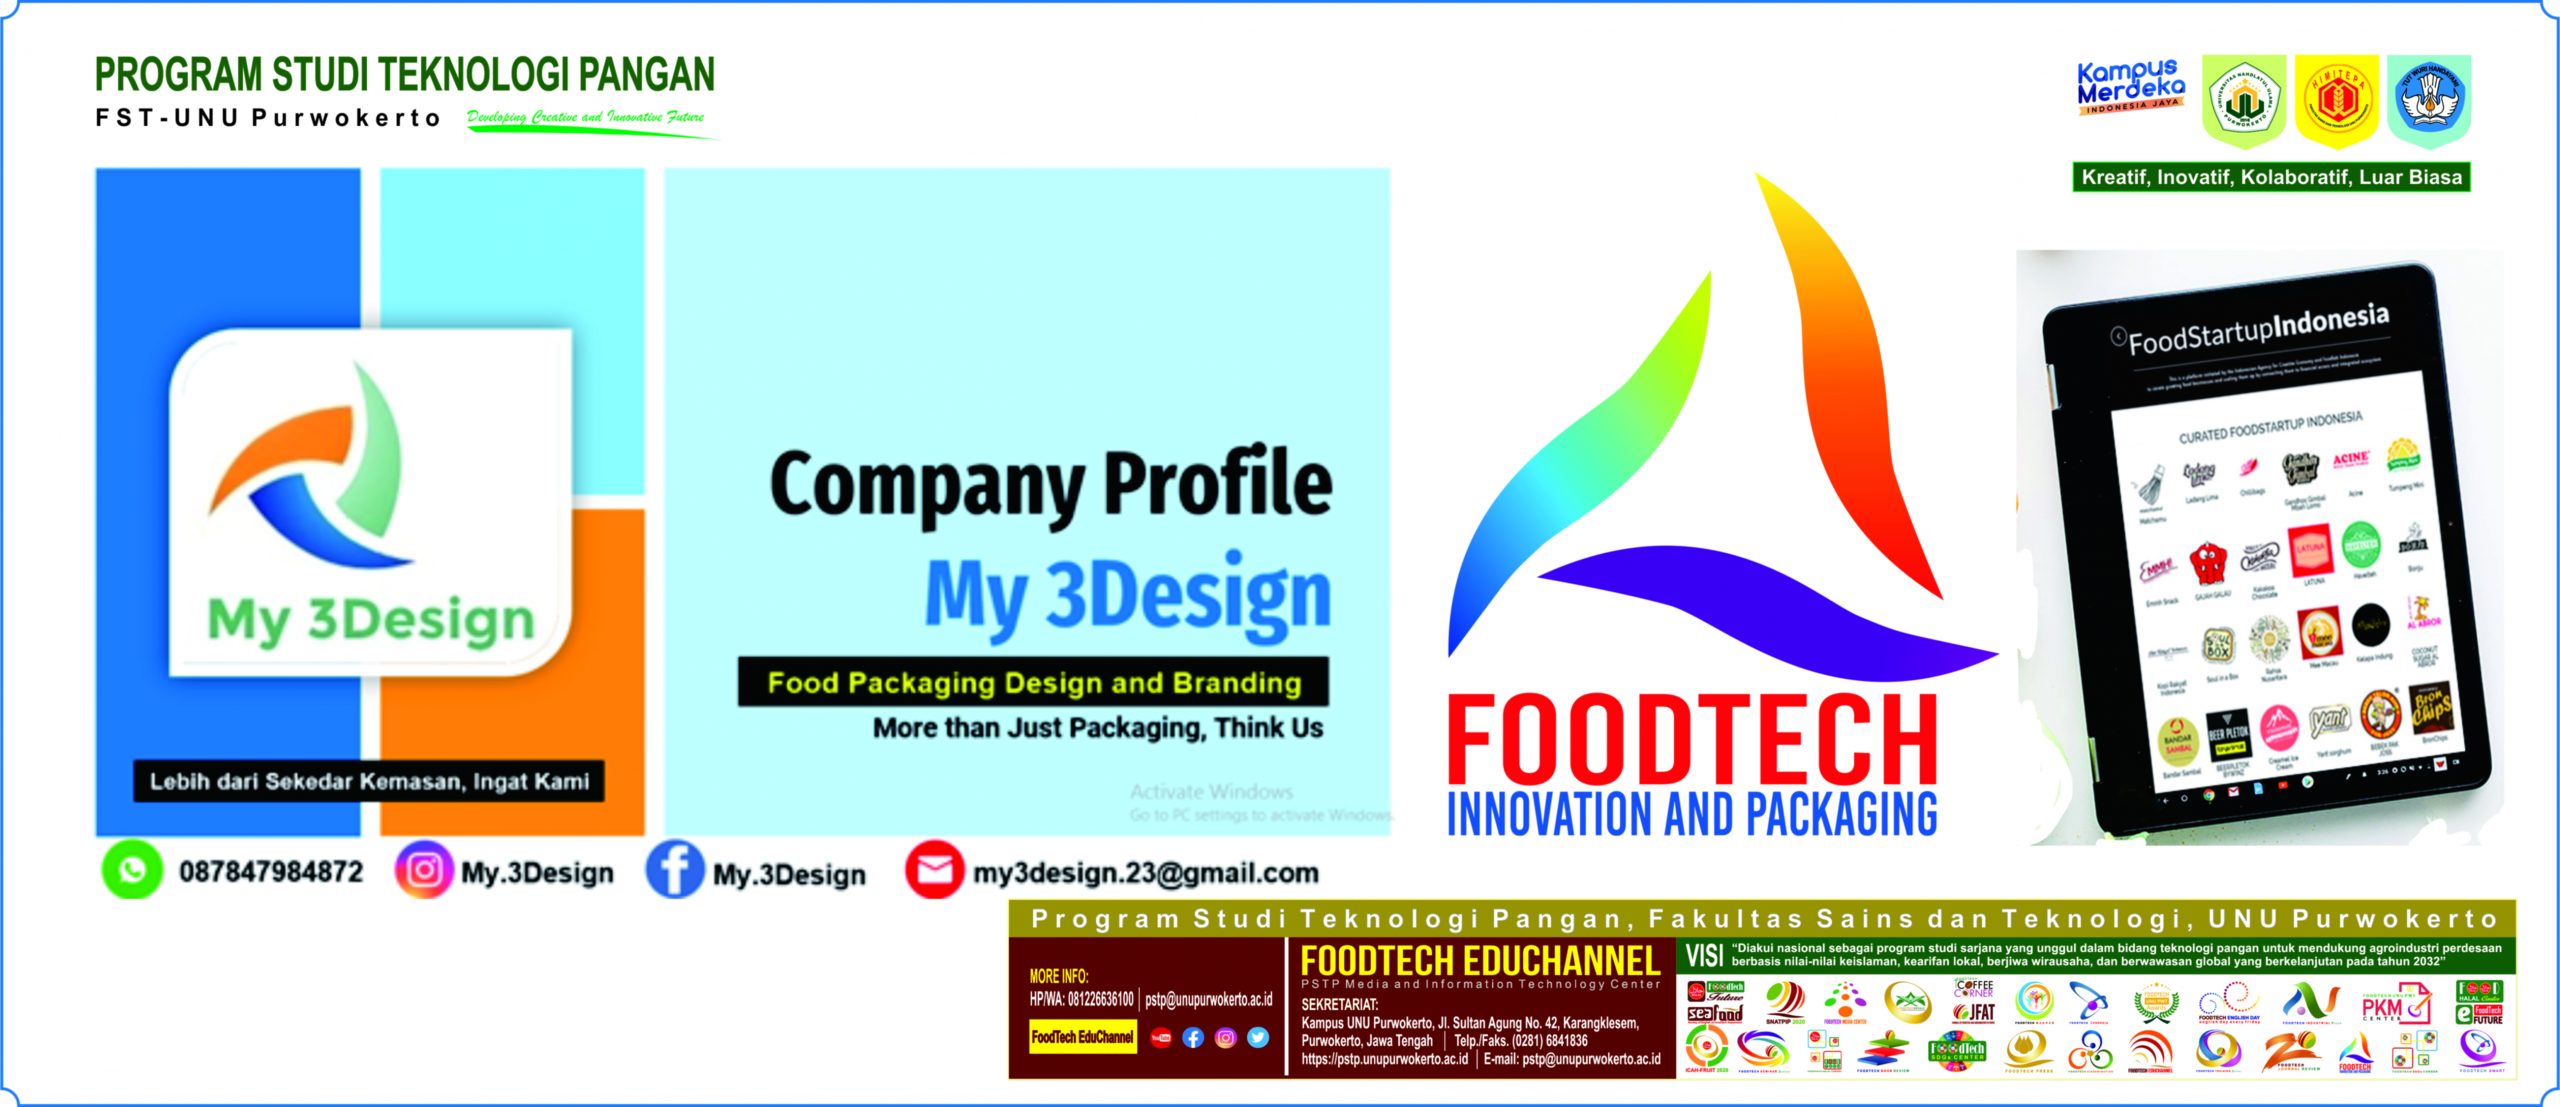 FoodPreneurship – Teknologi Pangan: Mengenal My 3Design, salah satu Startup Teknologi Pangan UNU Purwokerto